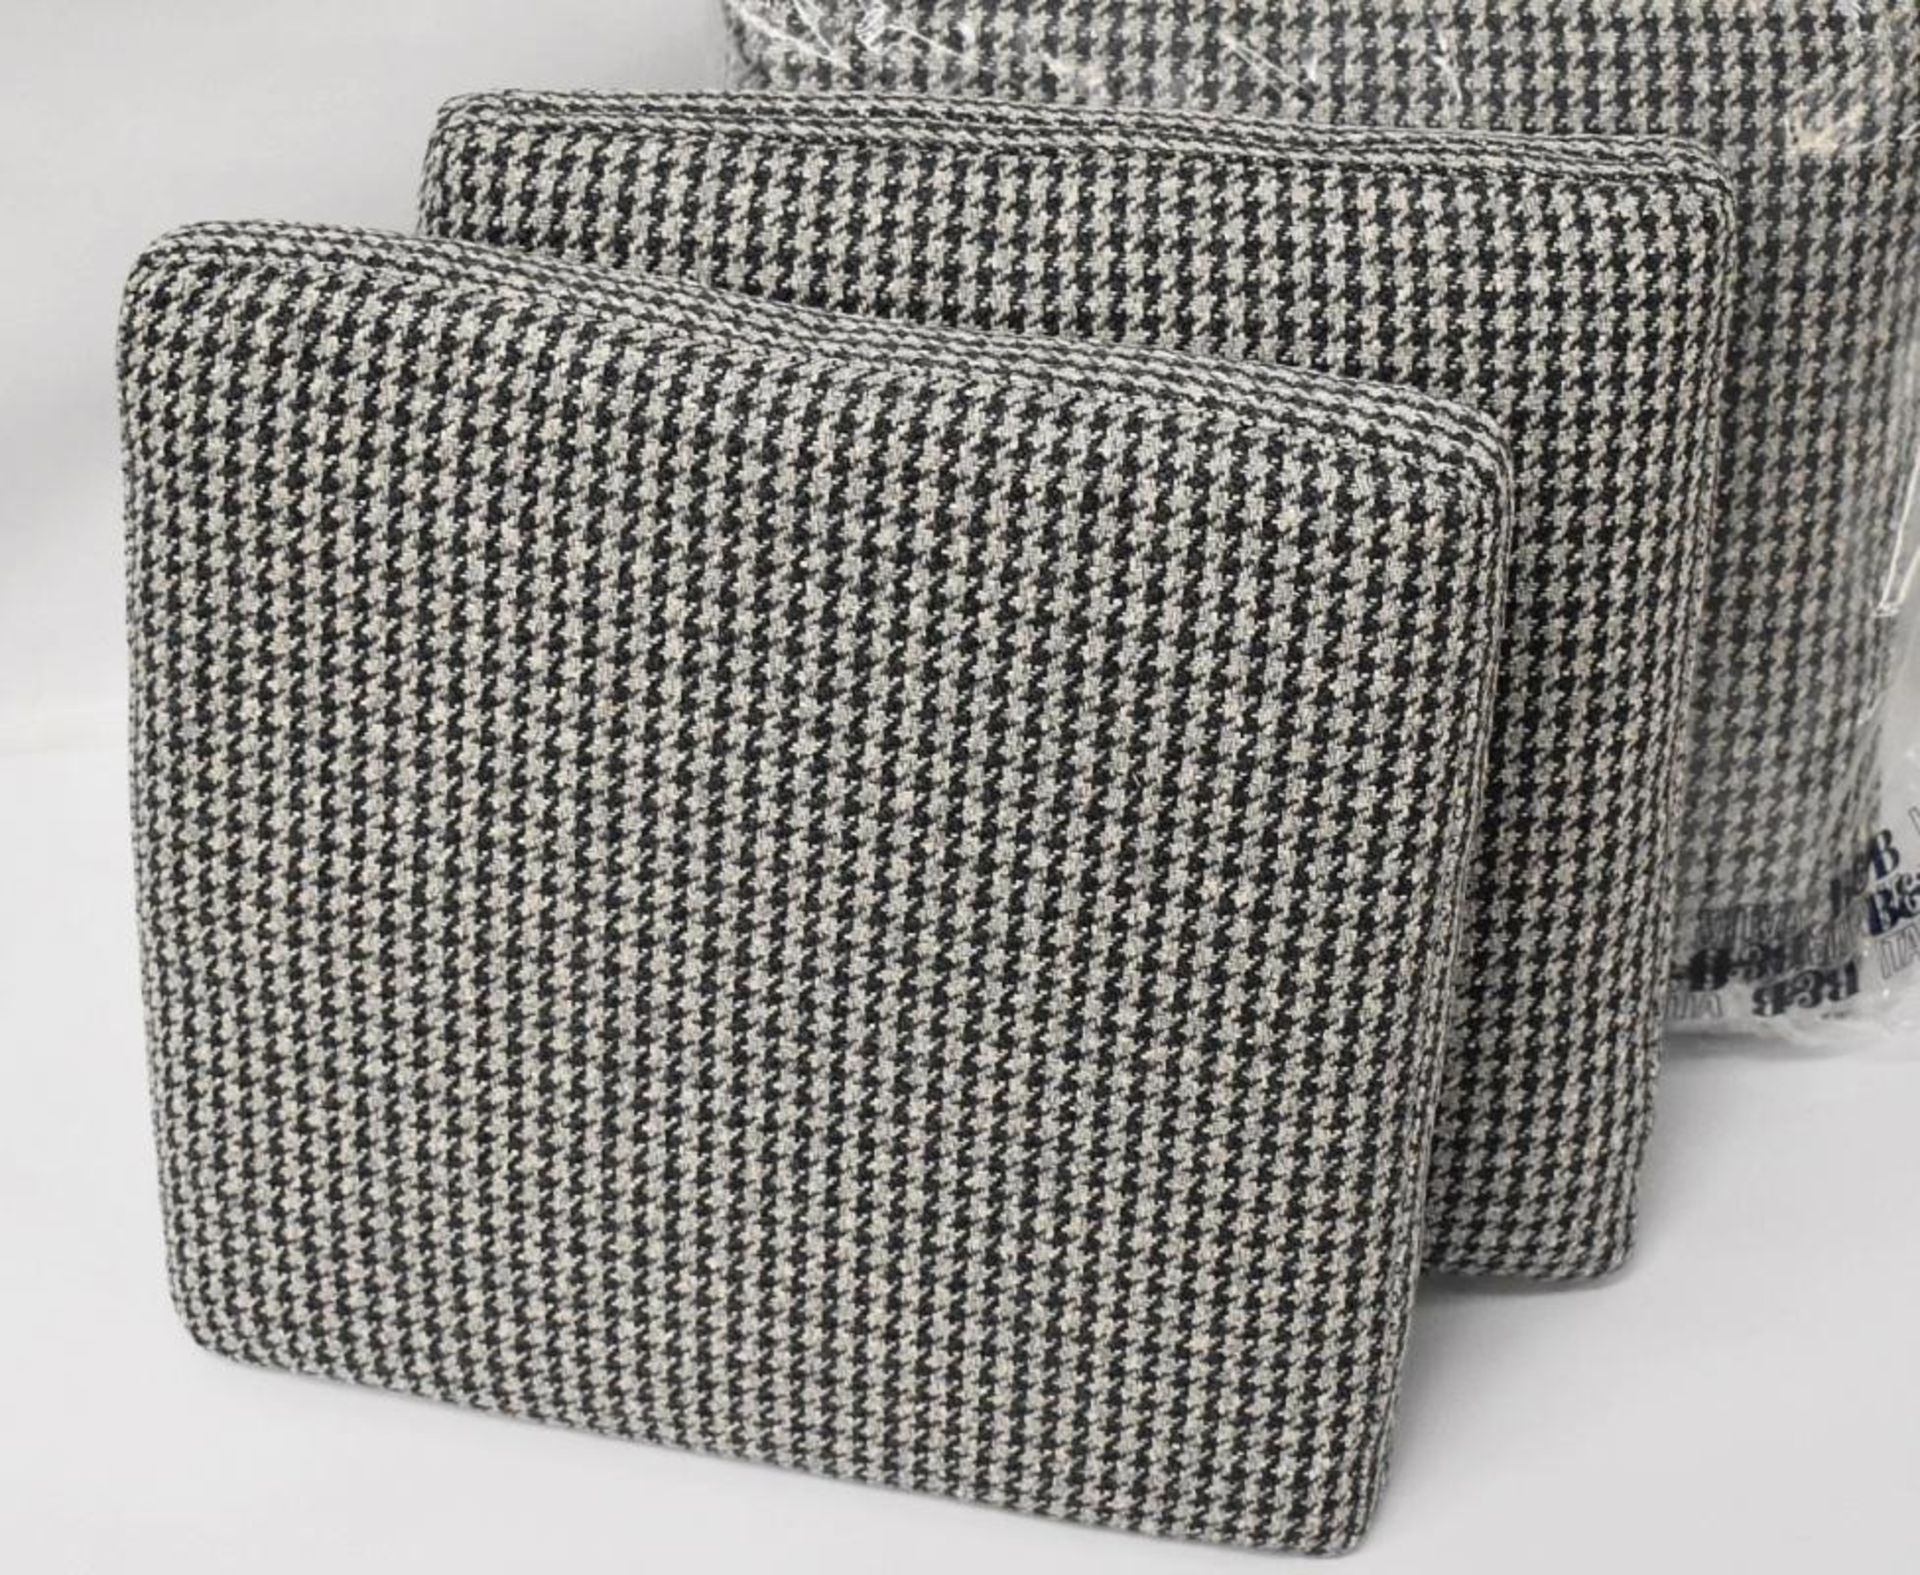 4 x B&B ITALIA 'Andy 13' Sofa Back Cushions In A Premium Woven Houndstooth Fabric - Ref: 5089331/B/P